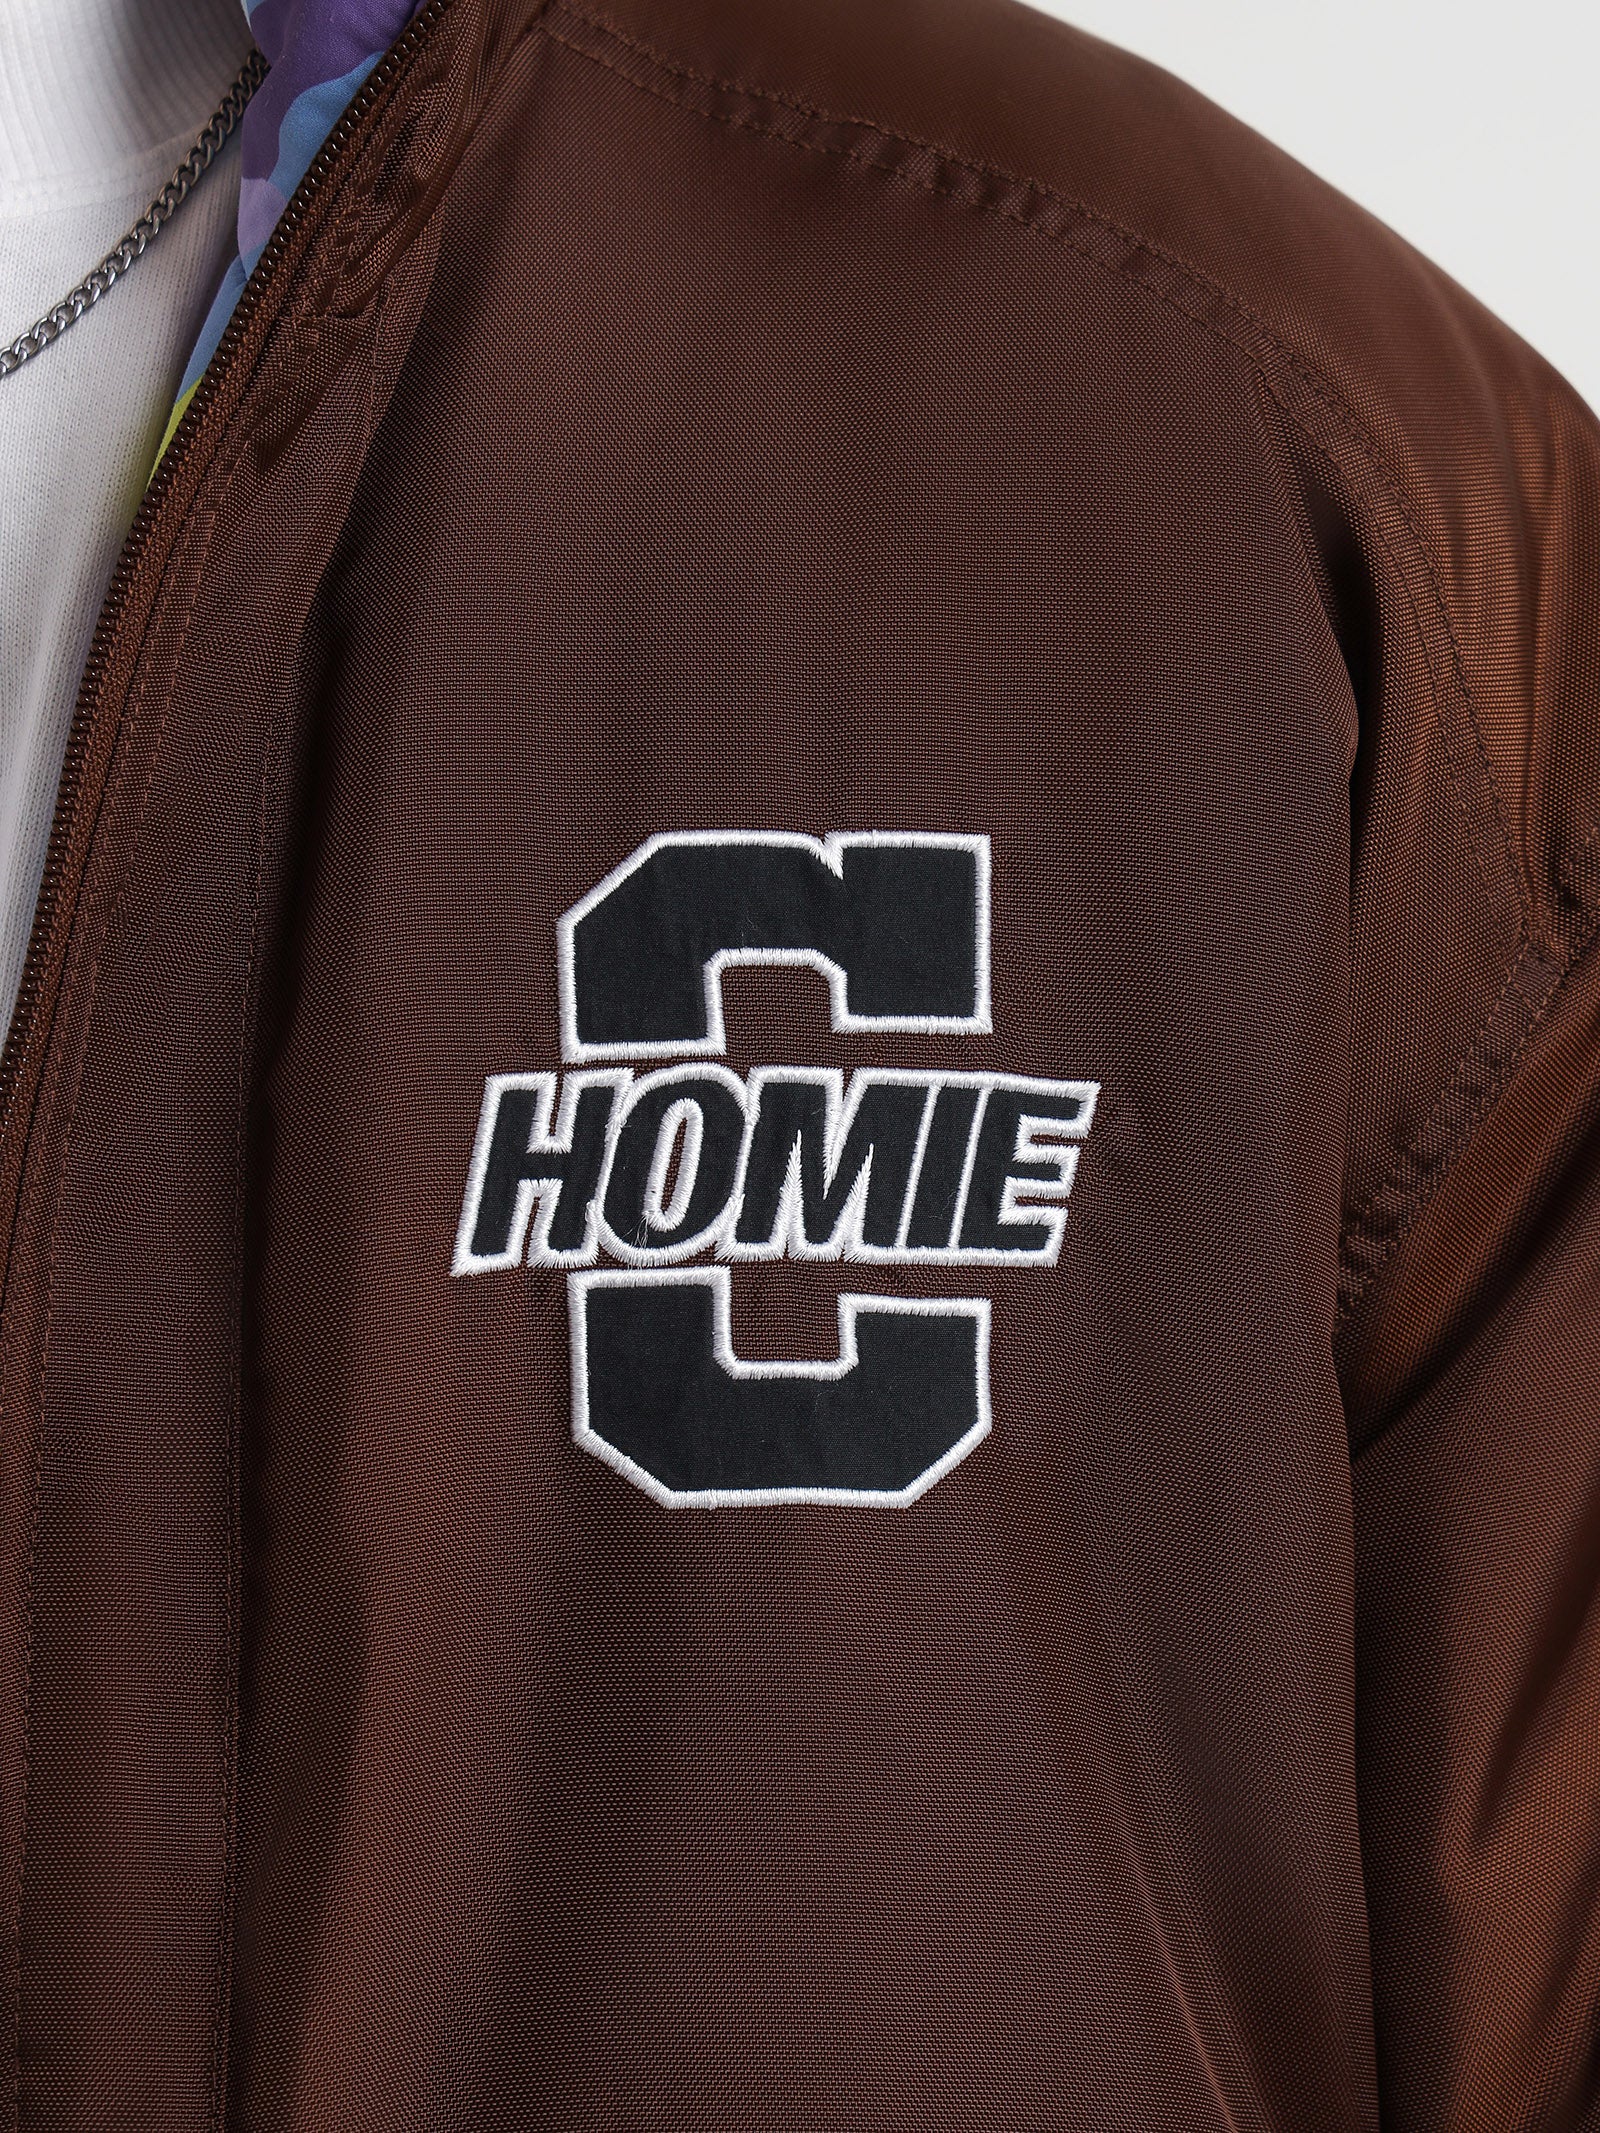 Rebound HoMie Reversible Jacket in Brown & Camo